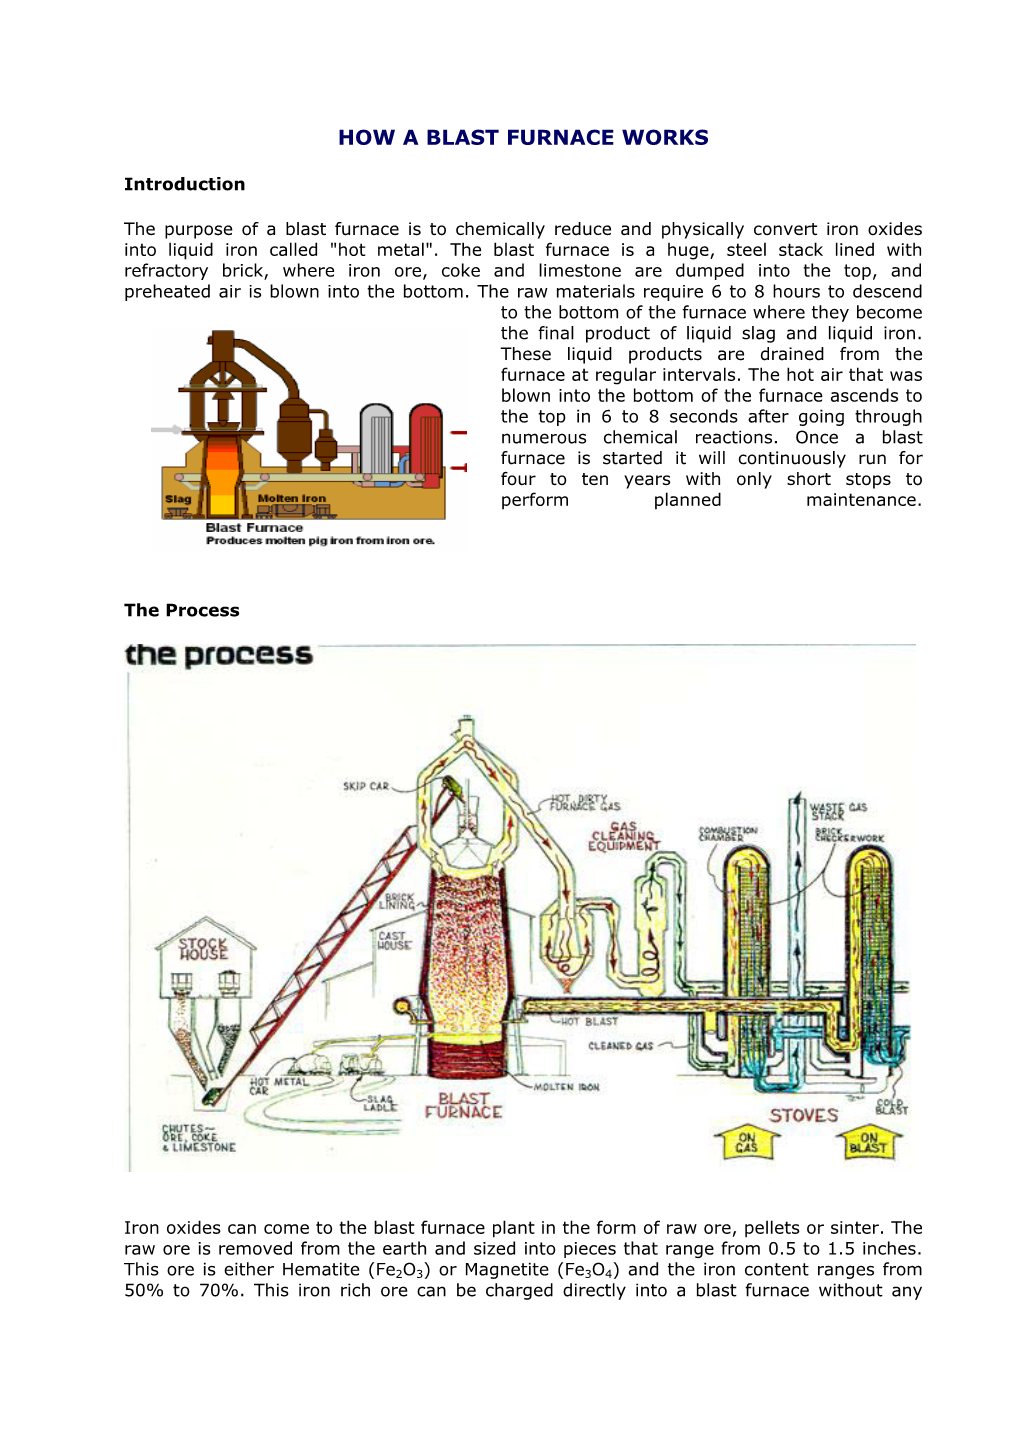 The Basic Oxygen Steelmaking (Bos) Process